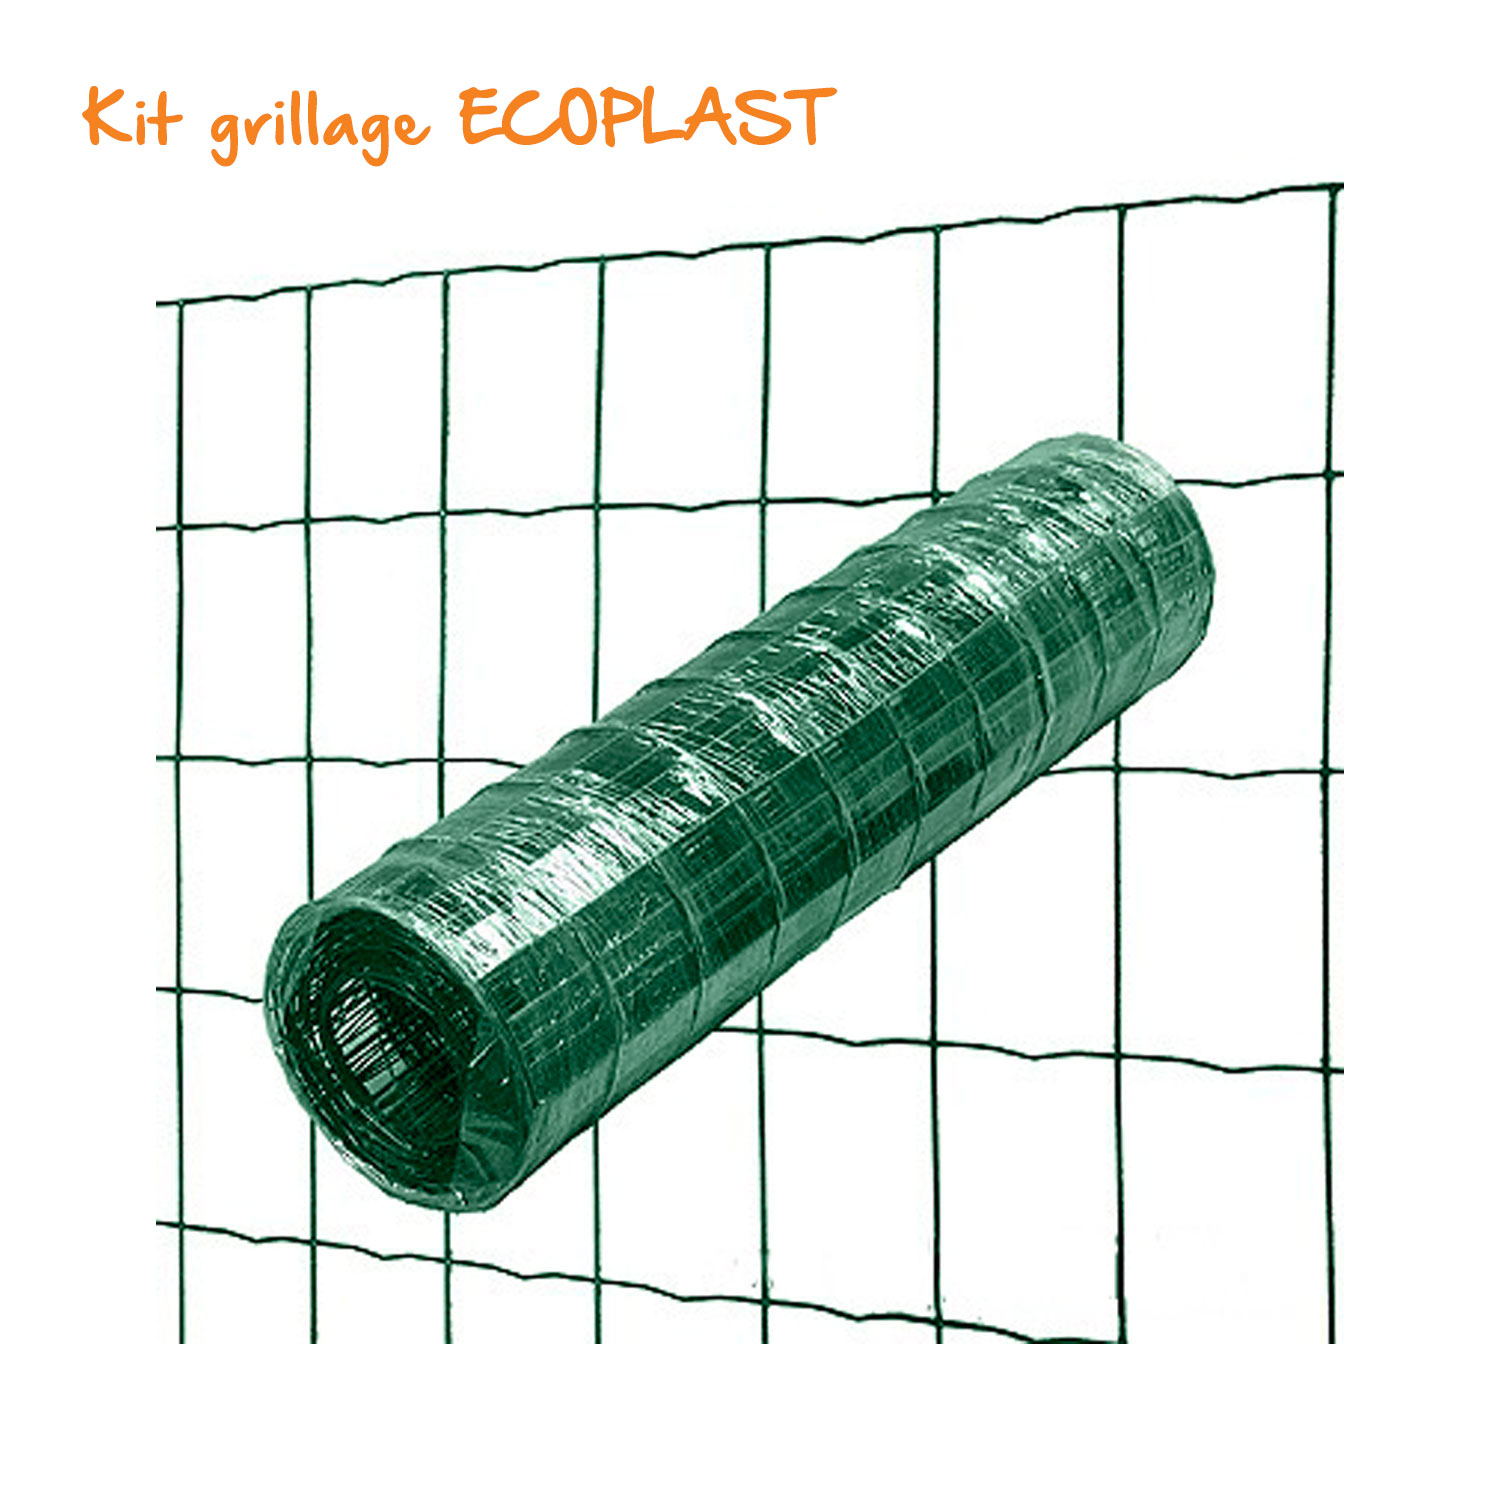 Kit grillage soudé ECOPLAST 100 x 75 mm - Ø 2,1mm - Lg. 25 m Vert 